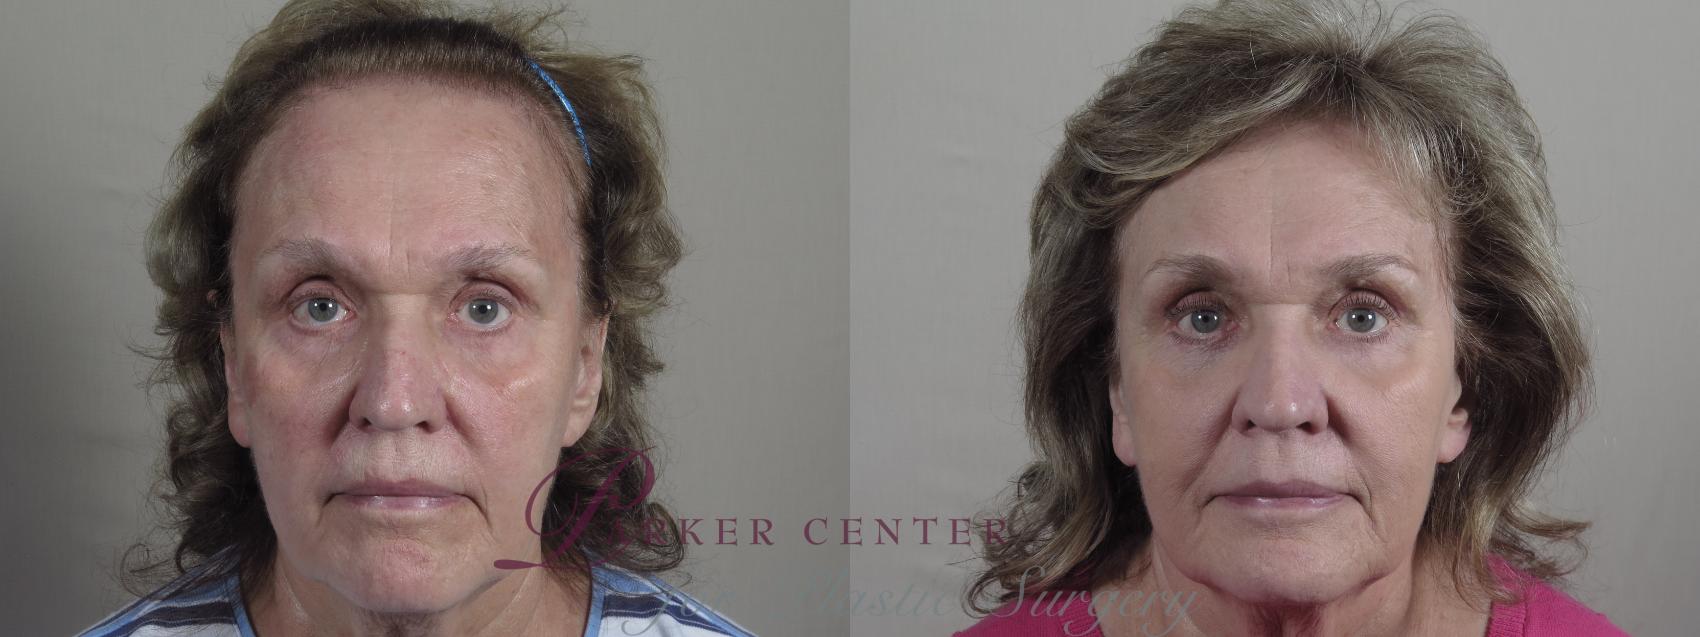 Eyelid Lift Case 1016 Before & After Front | Paramus, NJ | Parker Center for Plastic Surgery